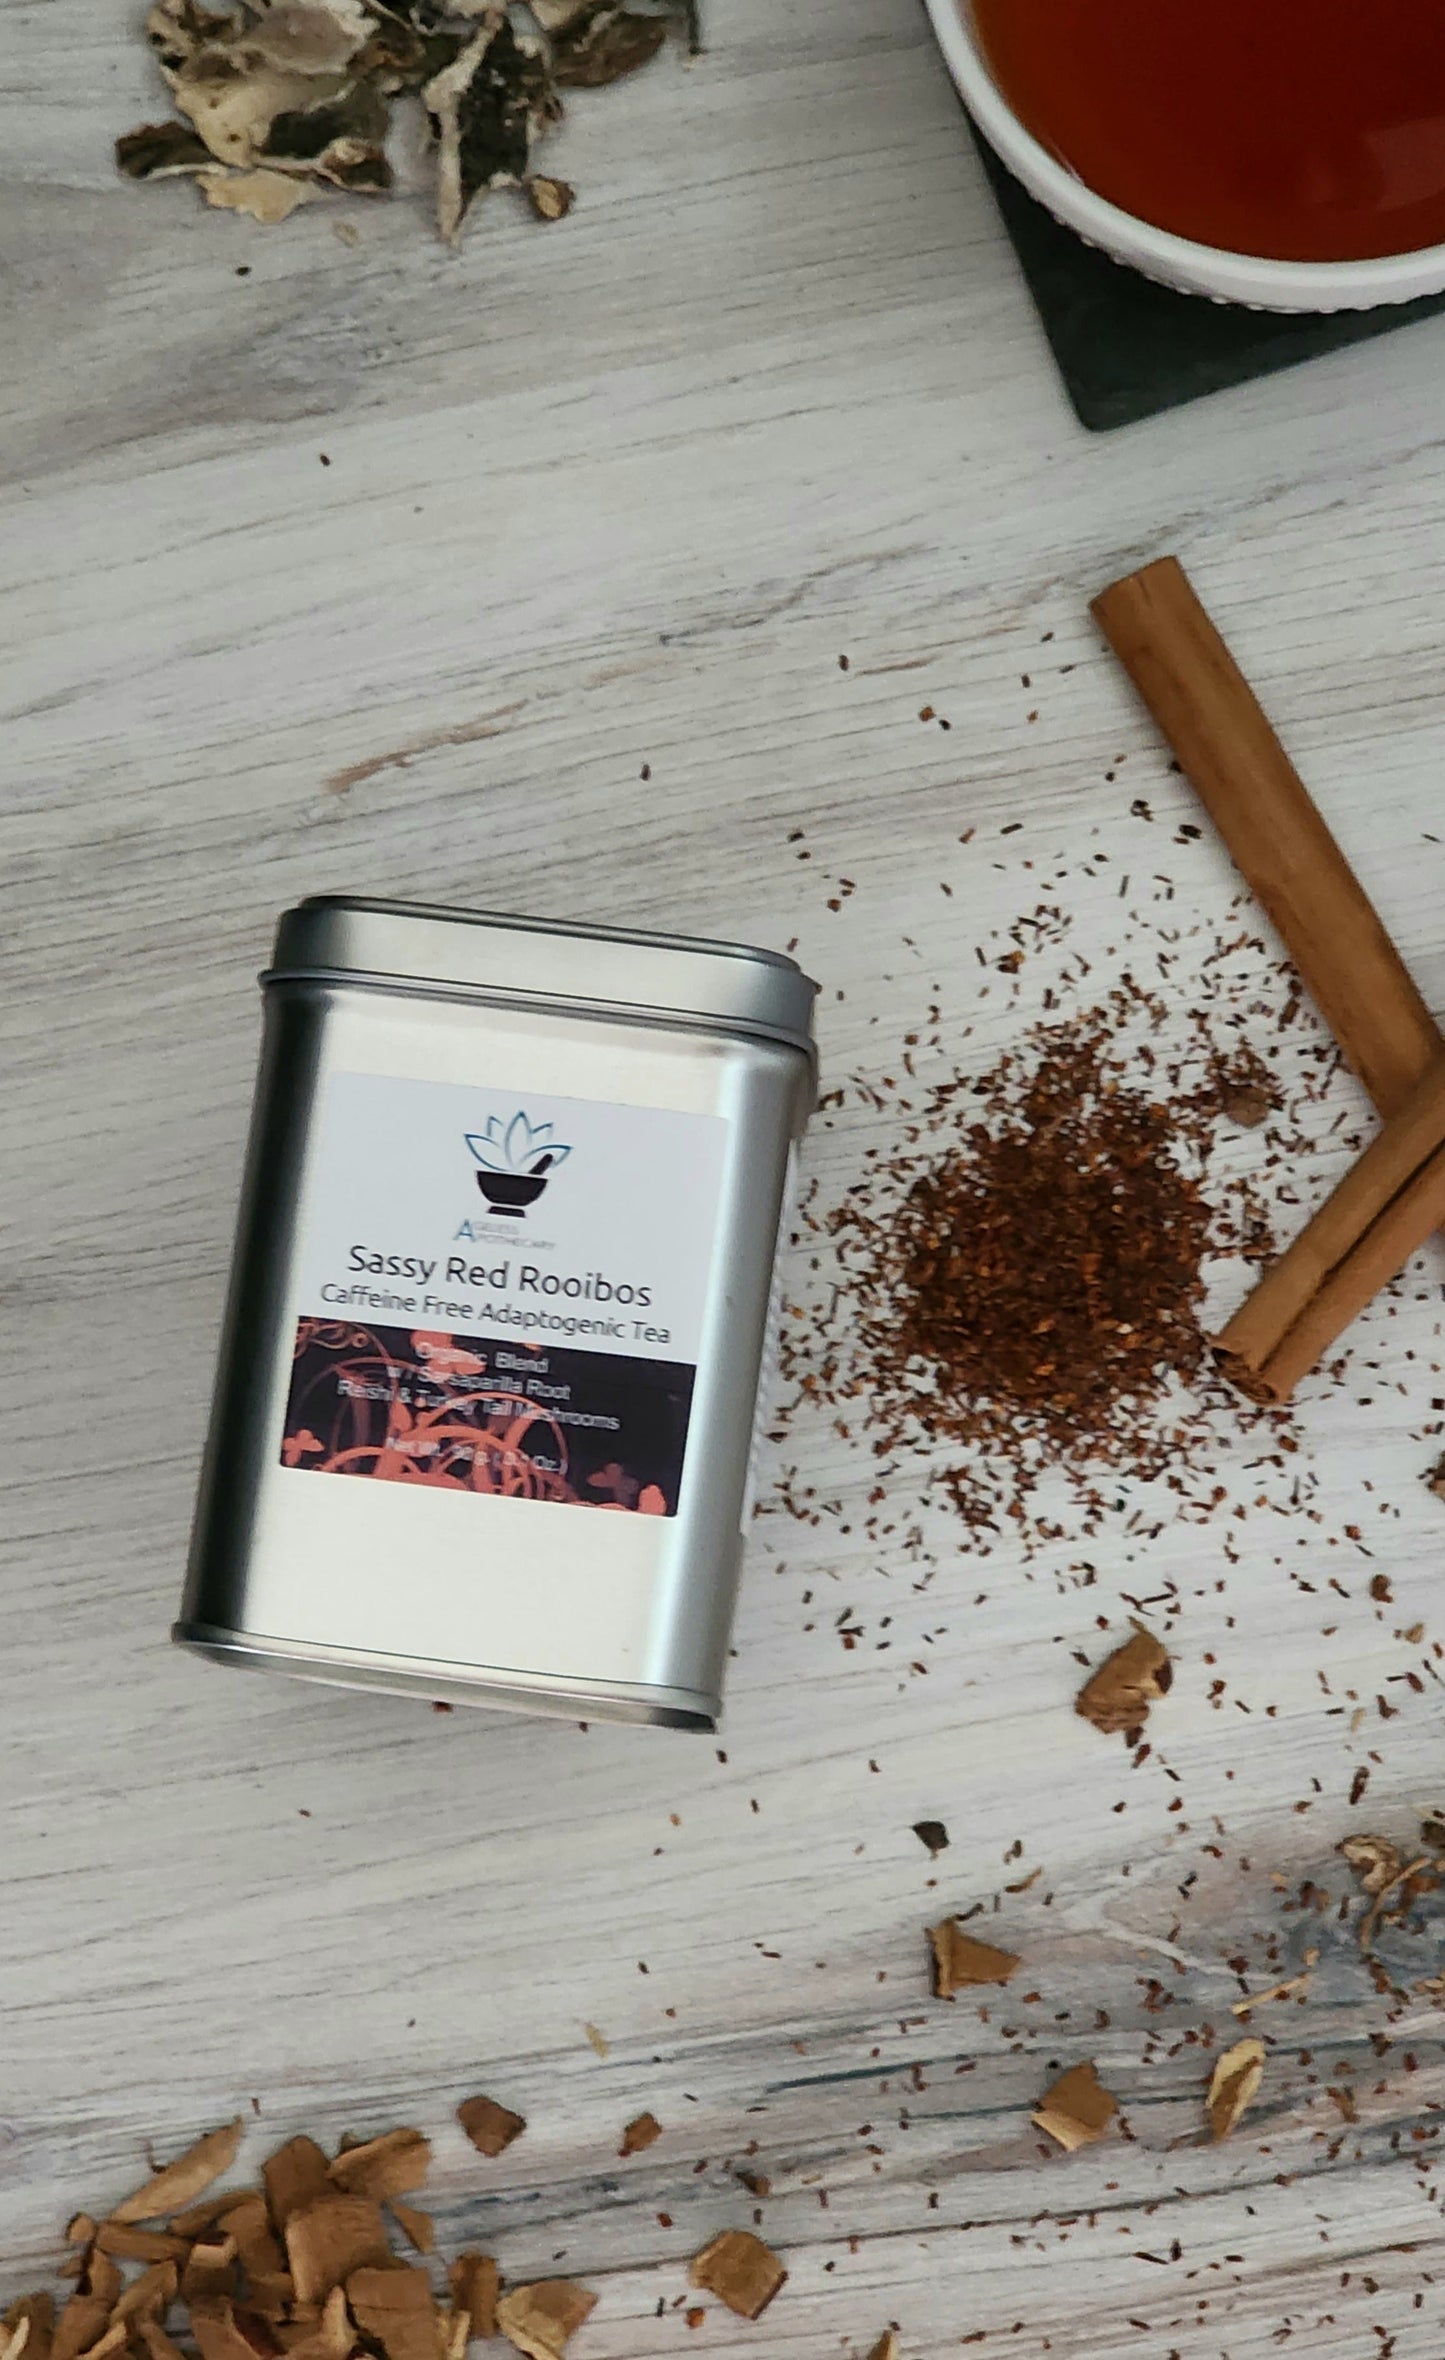 Sassy Red Rooibos Caffeine Free Adaptogenic Loose Tea with Strainer